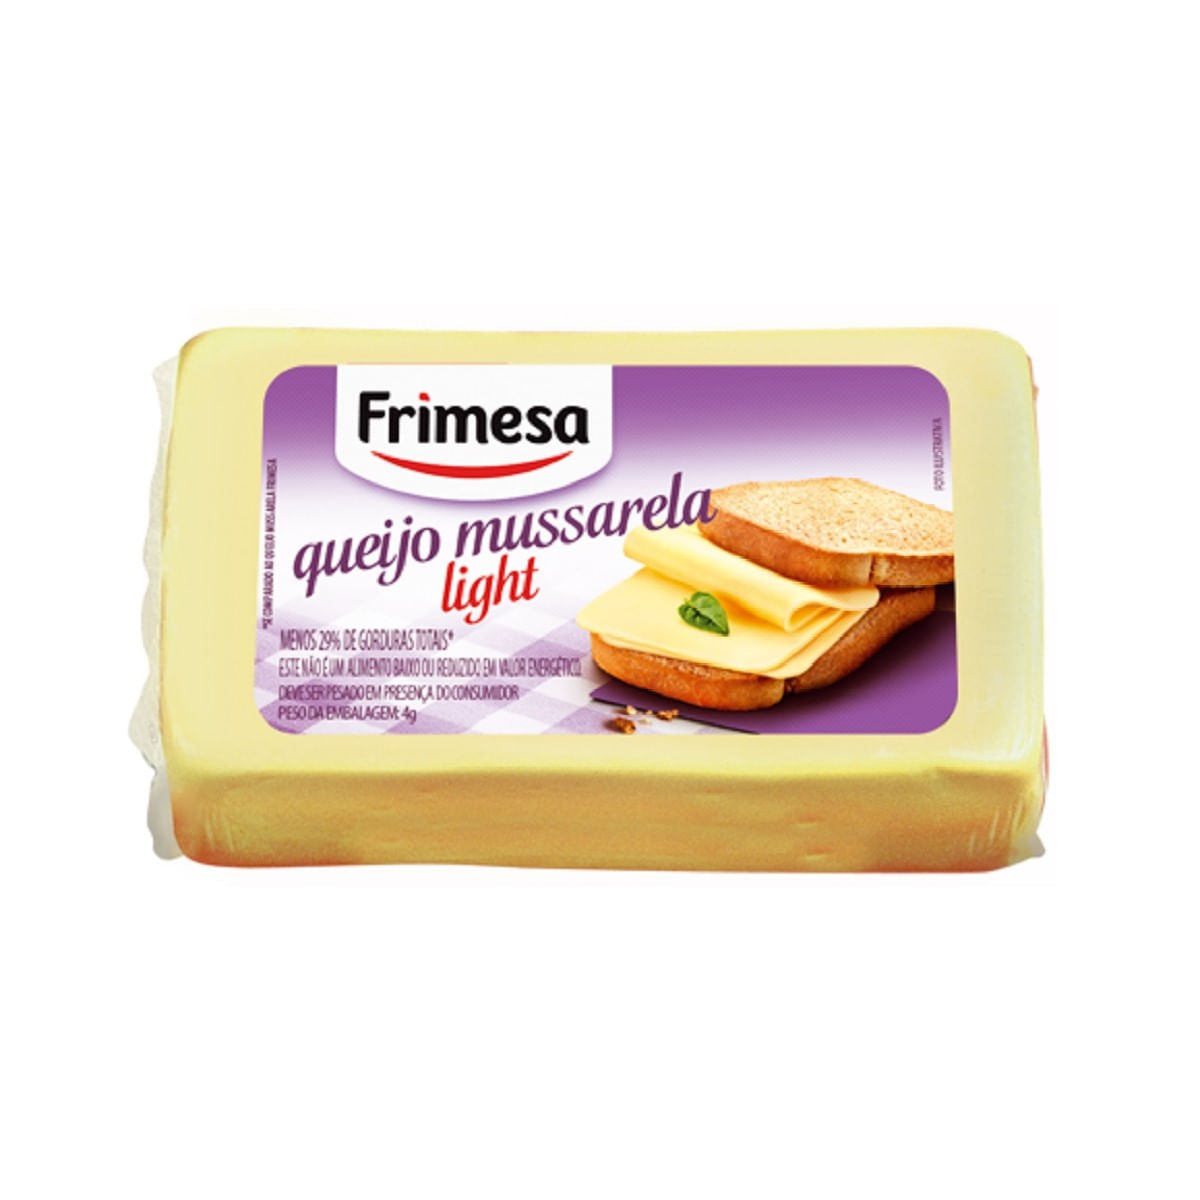 queijo-mussarela-light-mini-frimesa-aproximadamente-500-g-1.jpg